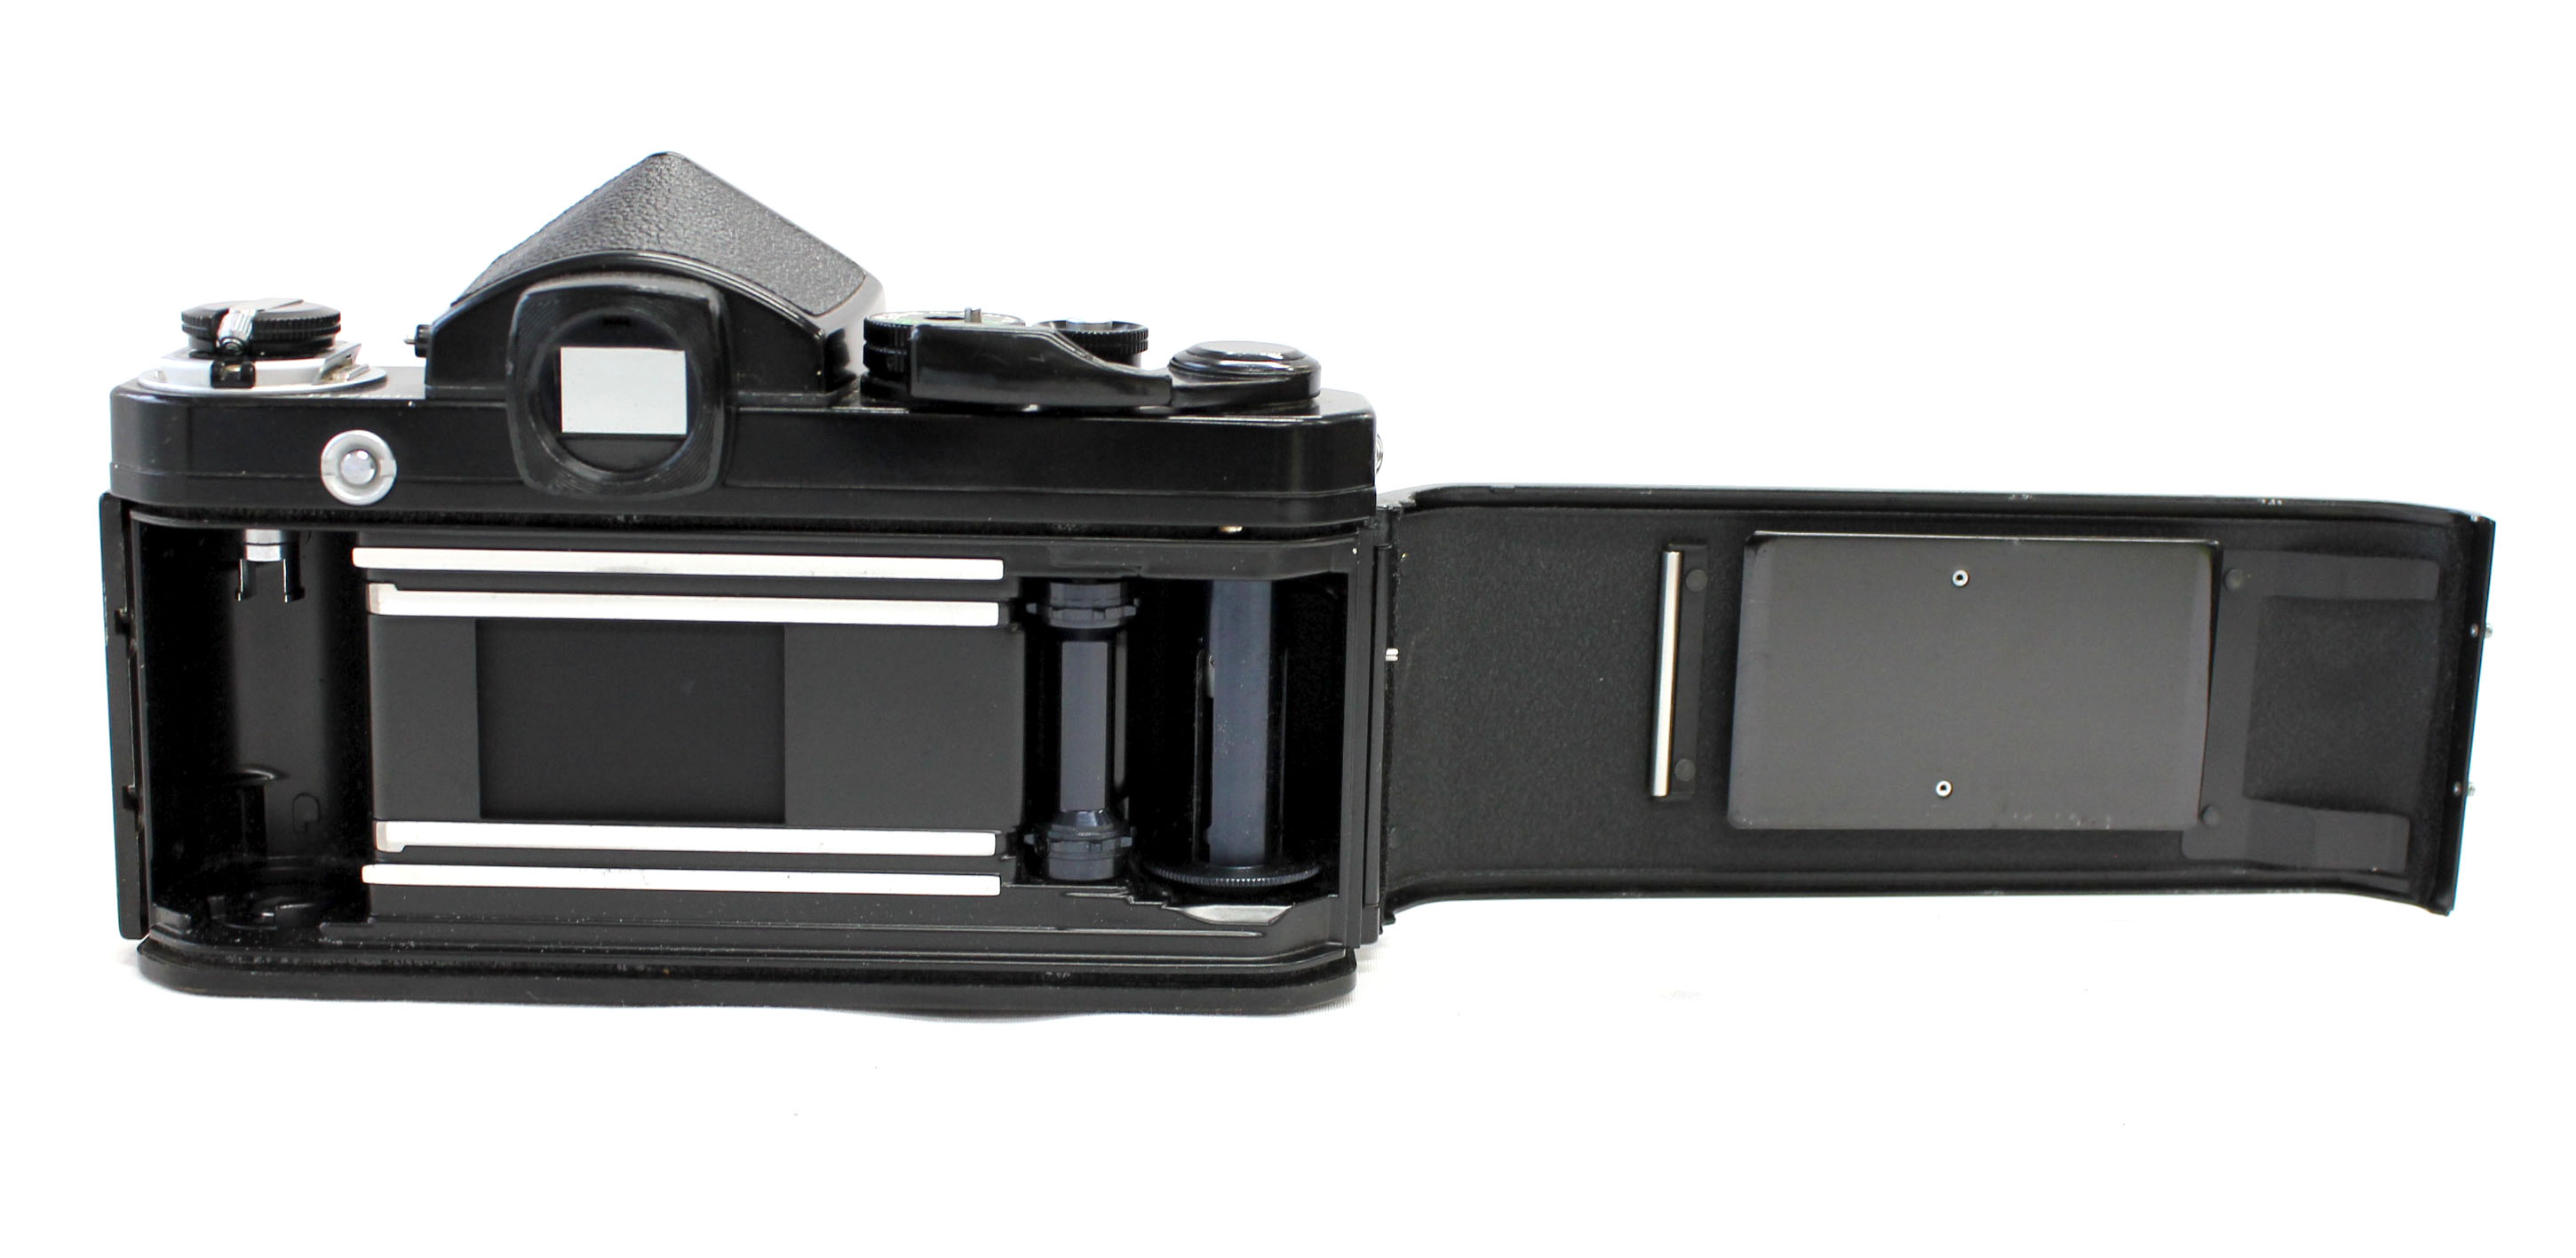  Nikon F2 Eye Level DE-1 Black 35mm SLR Film Camera from Japan Photo 9